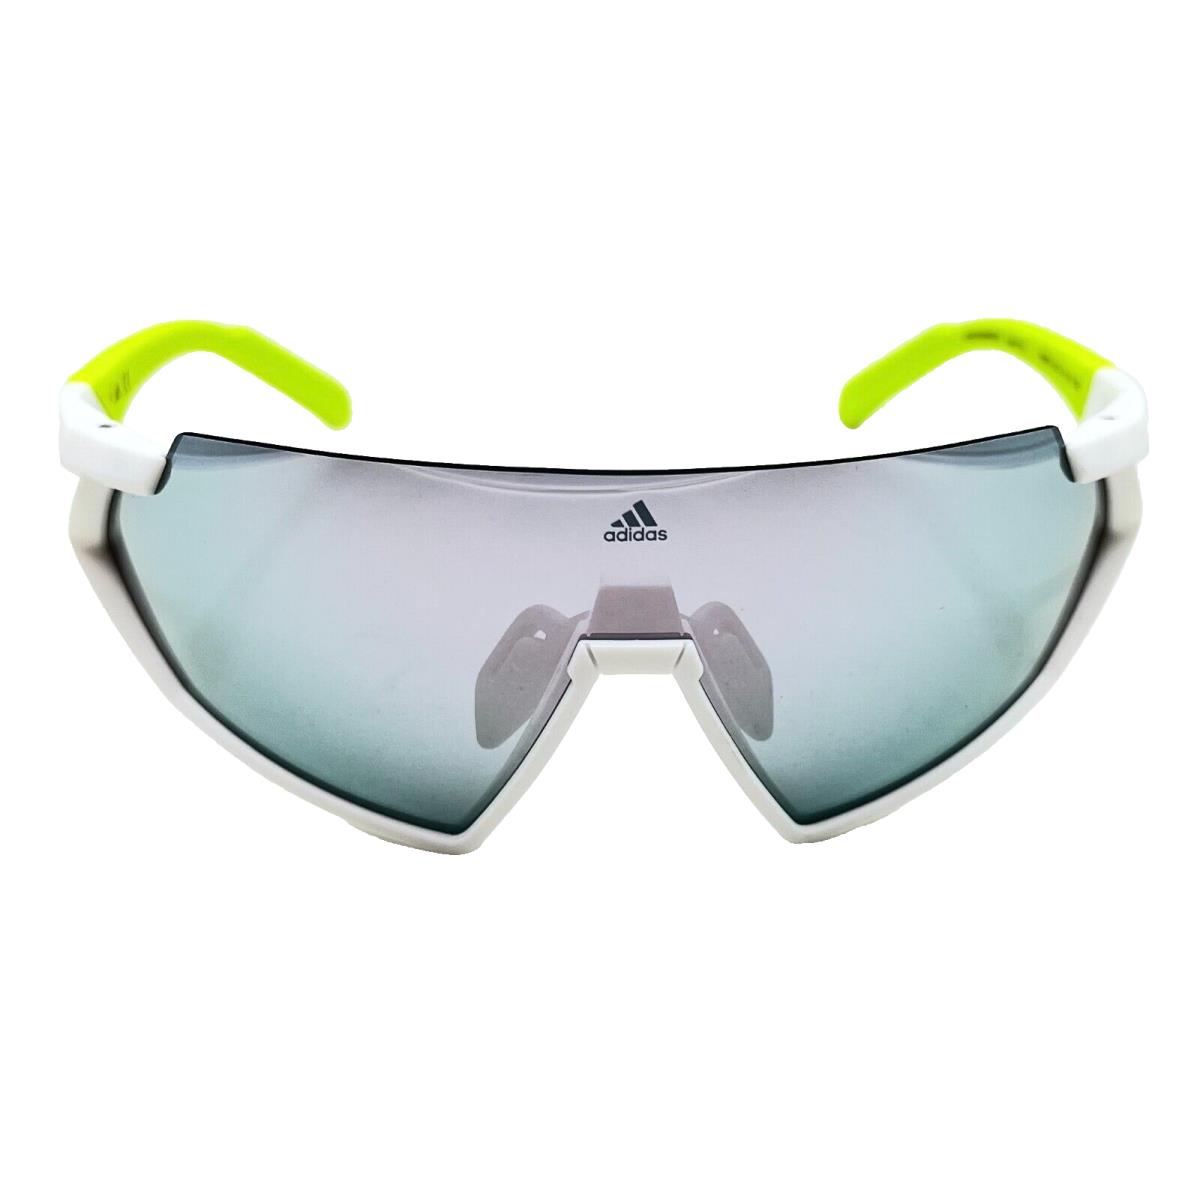 Adidas Sport SP0041 24C 134 - White - Sunglasses Case Lens